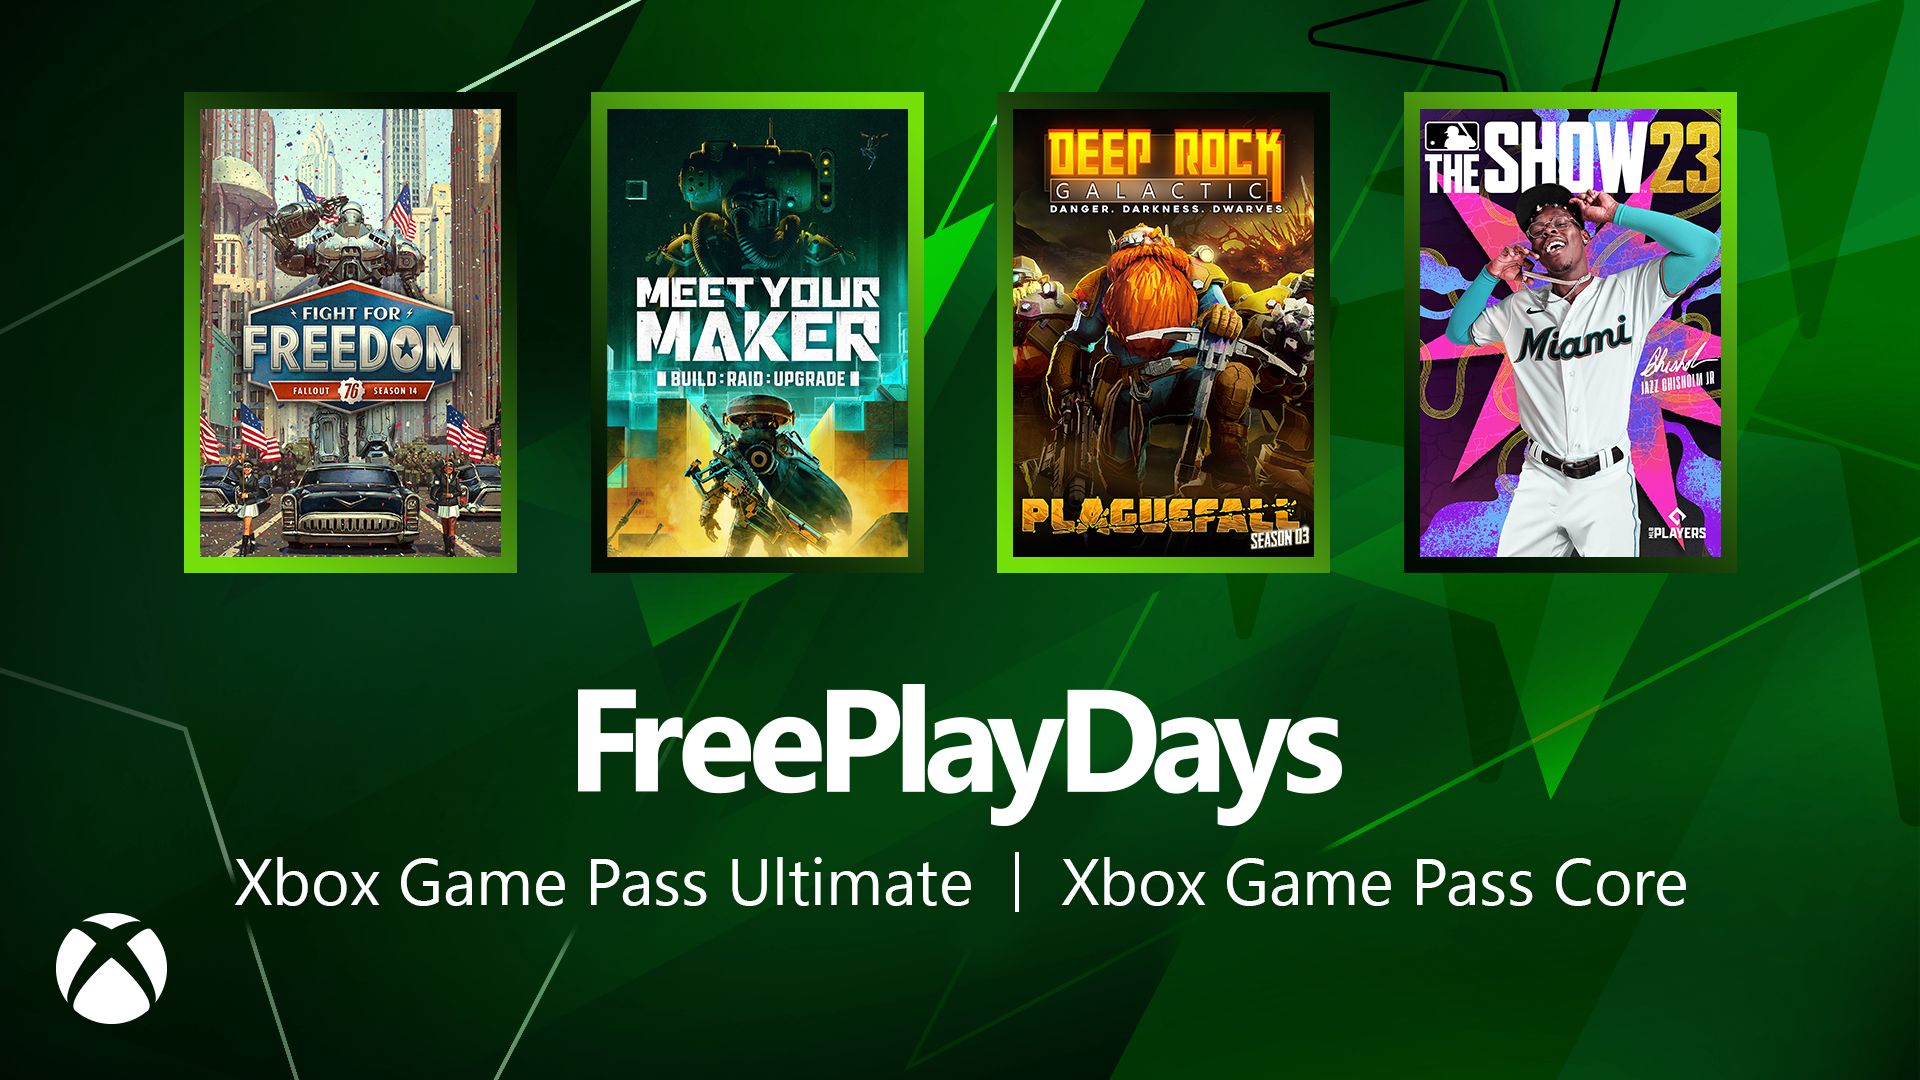 Gratis: Xbox Game Pass Ultimate sorprende a jugadores con estos